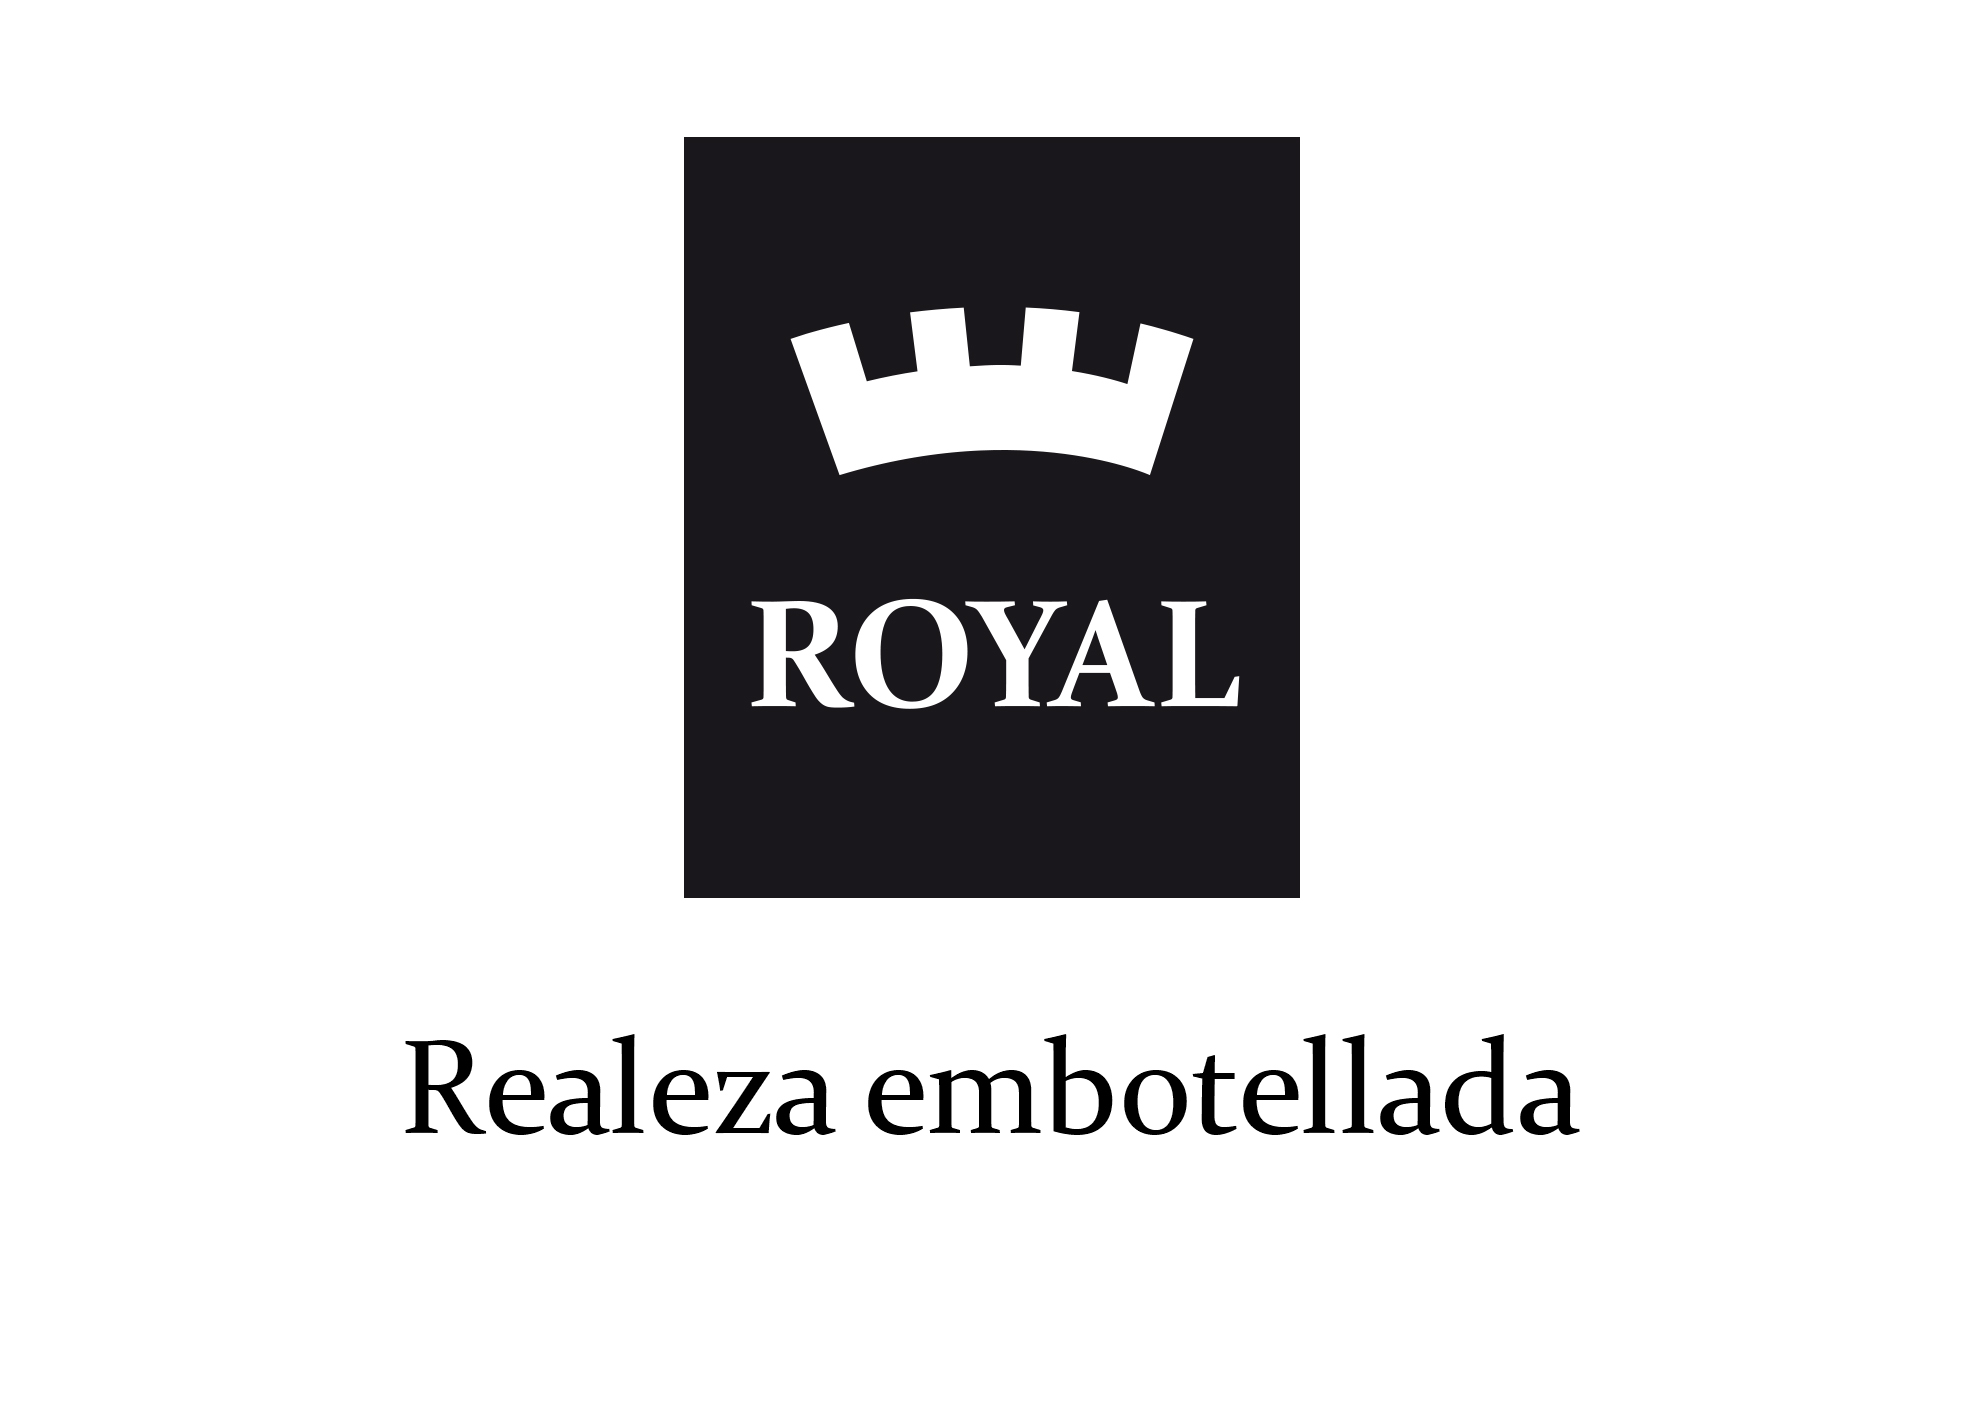 Royal by Lorca Romero Sanz - Creative Work